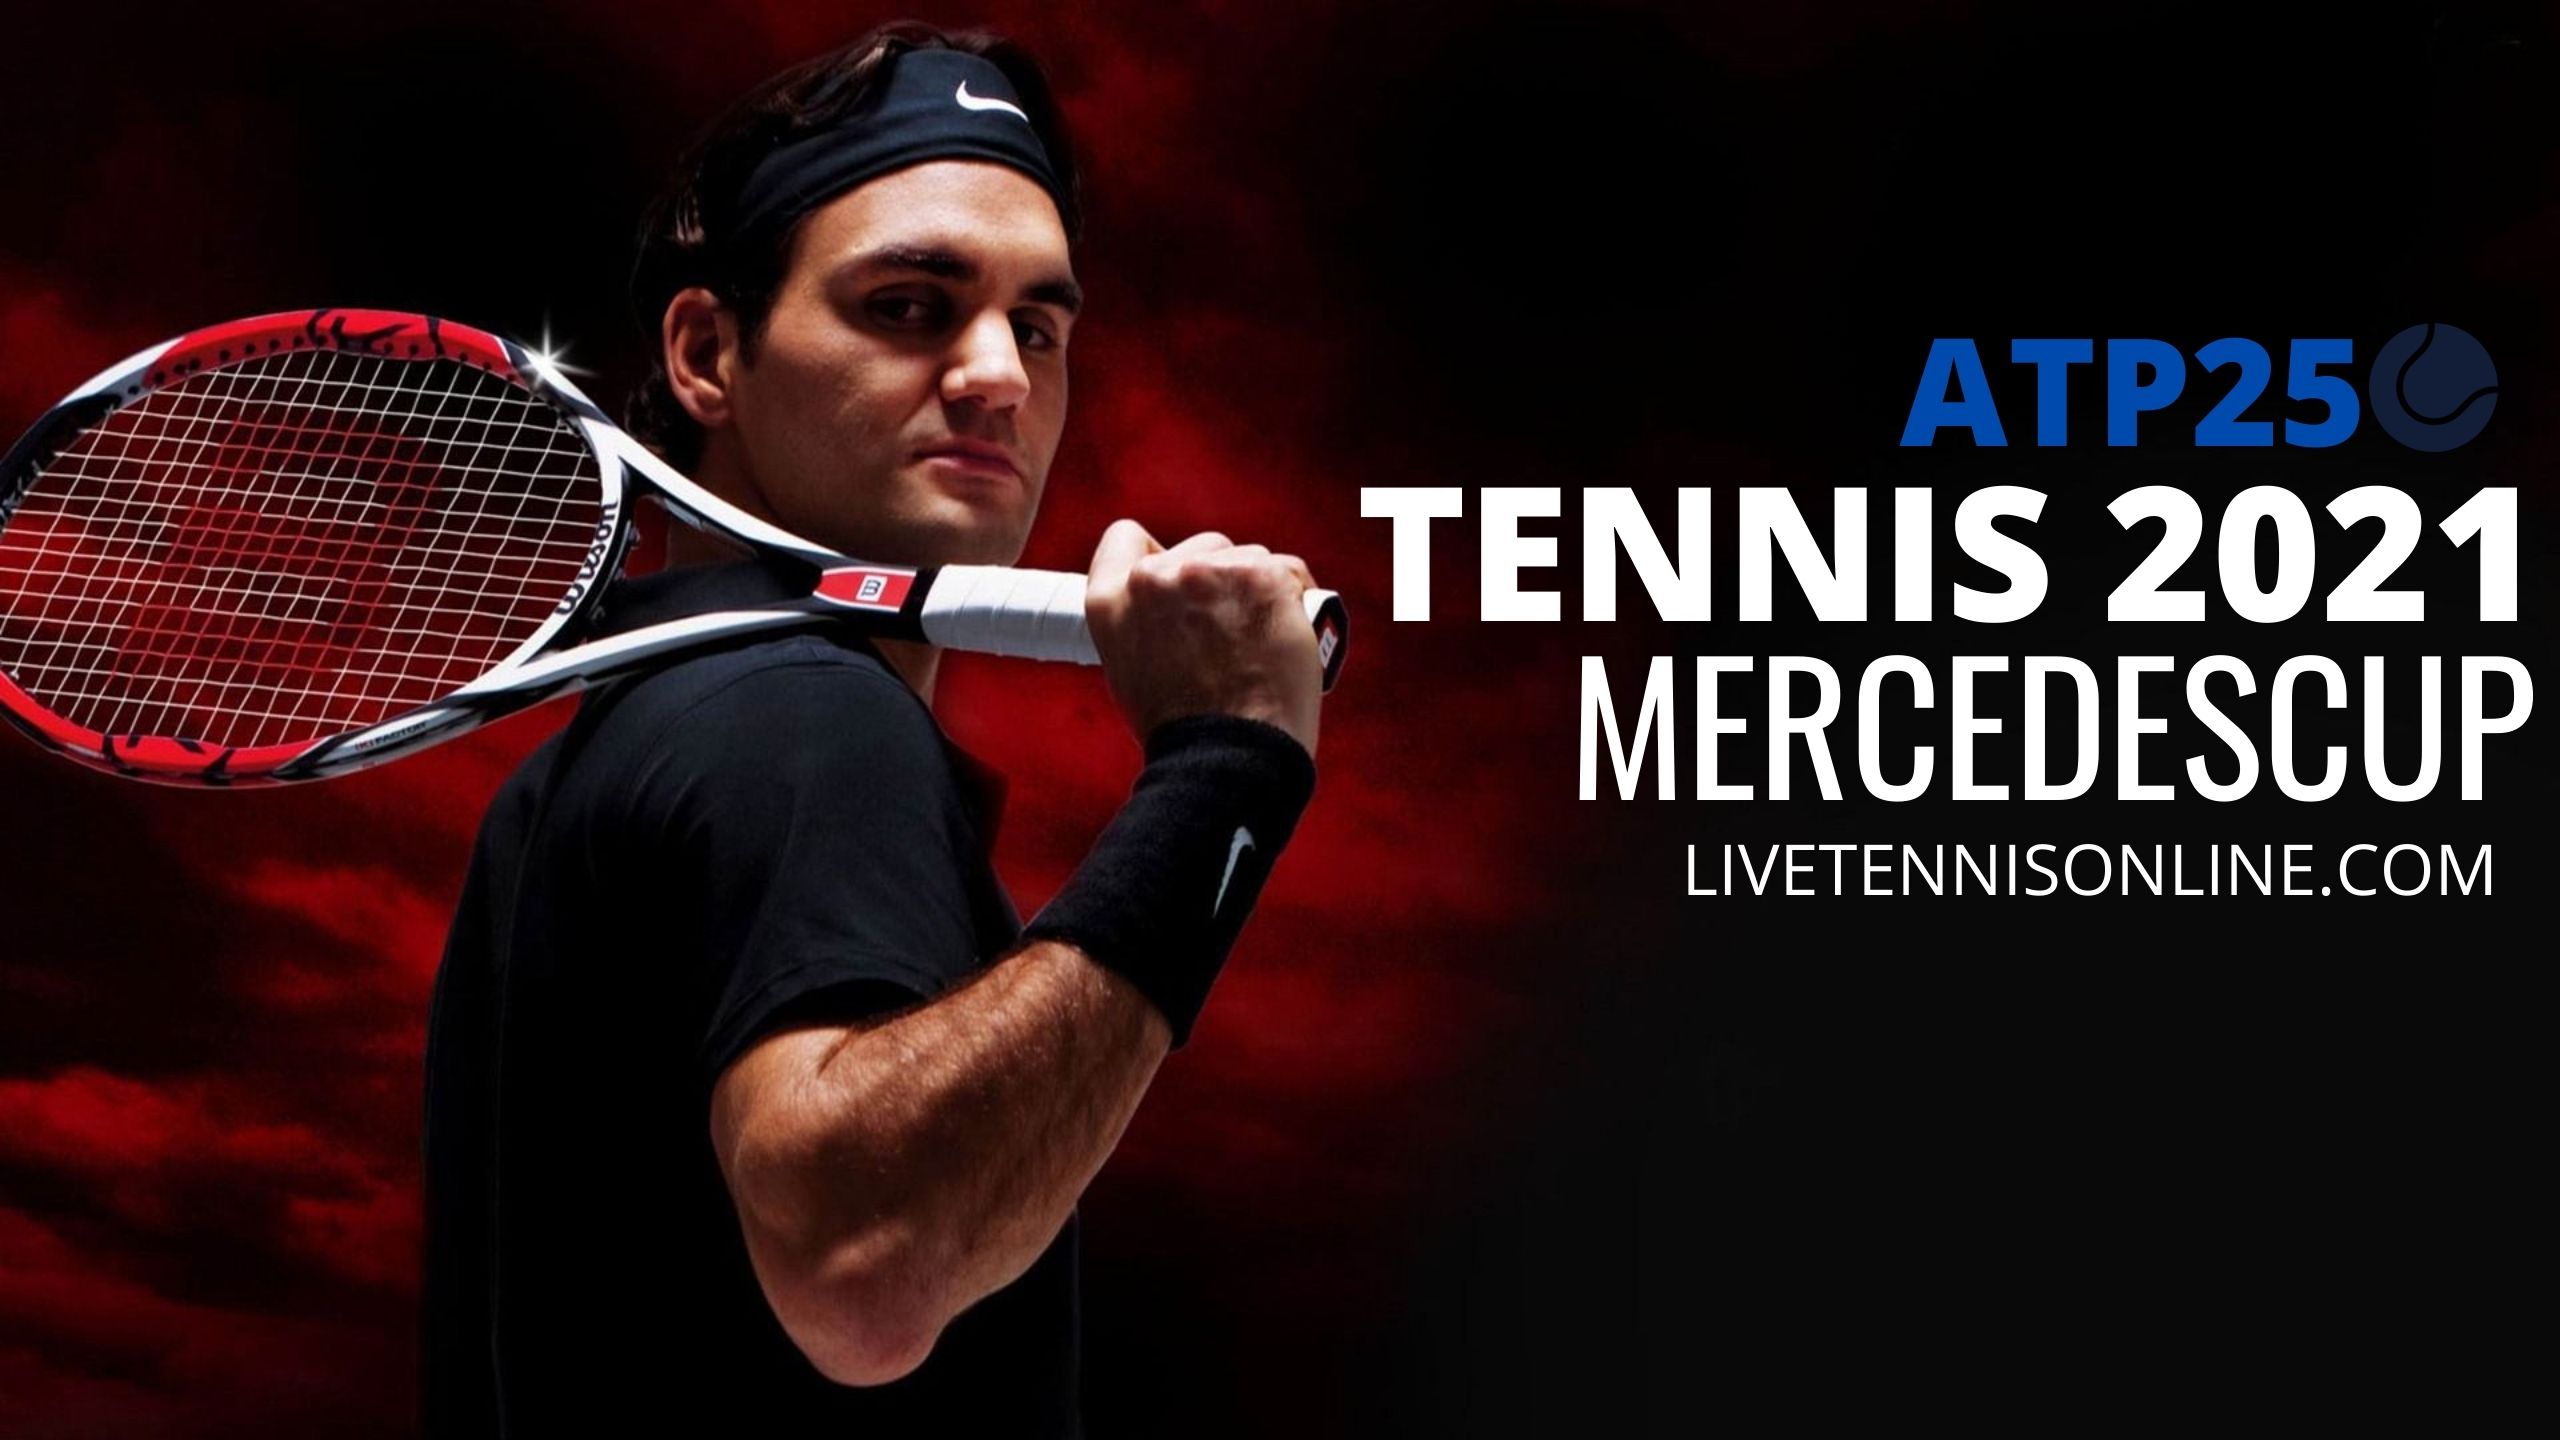 Mercedescup Tennis Live Stream 2021